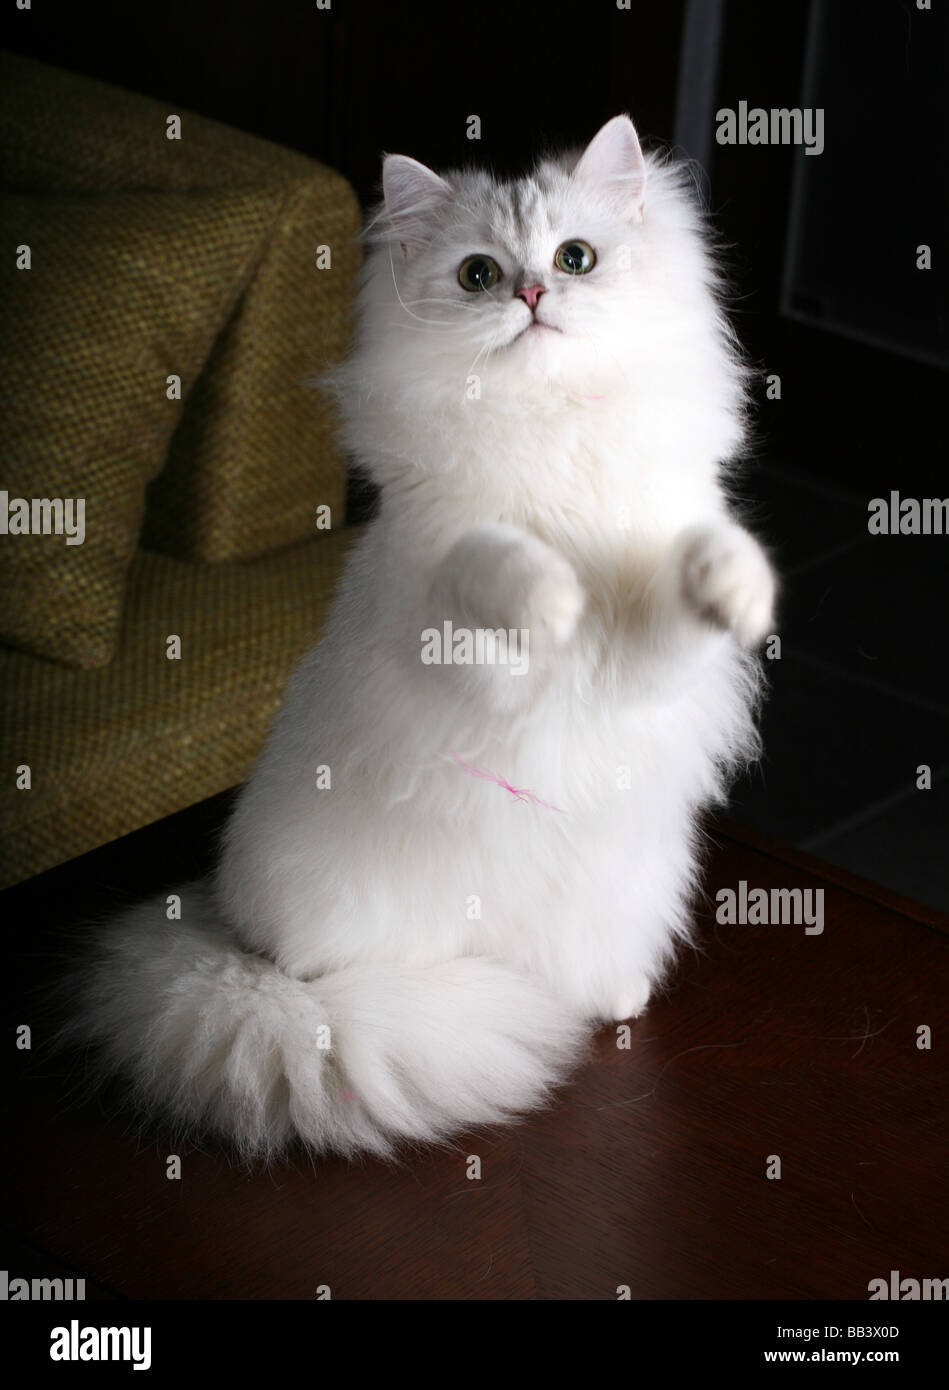 British silver cat Stock Photo